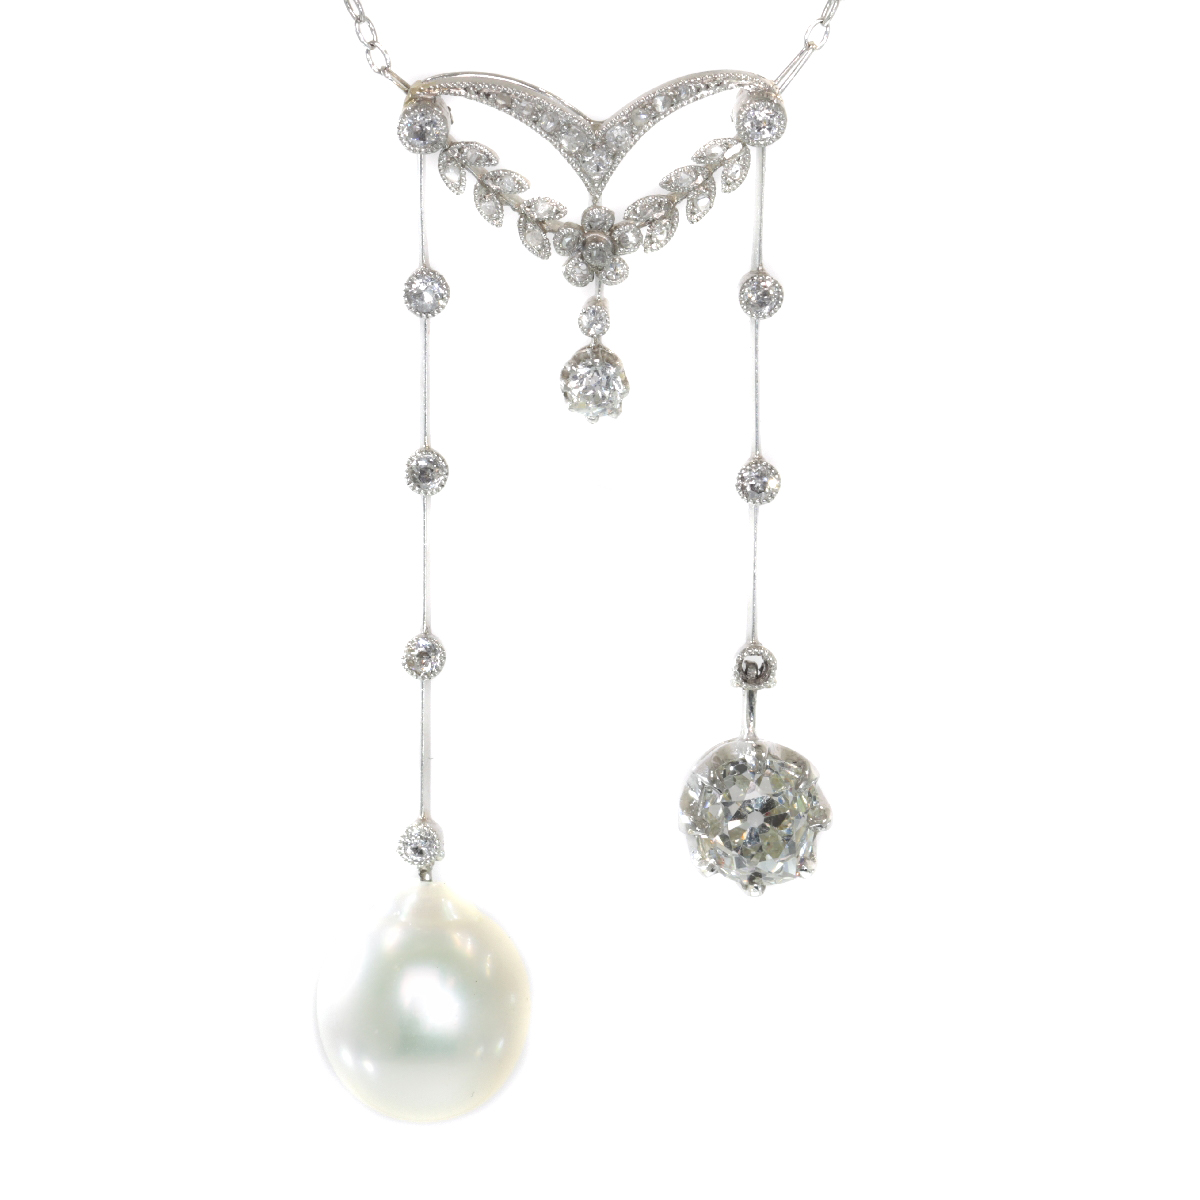 Elegant French Belle Epoque platinum diamond pearl necklace so-called négligé